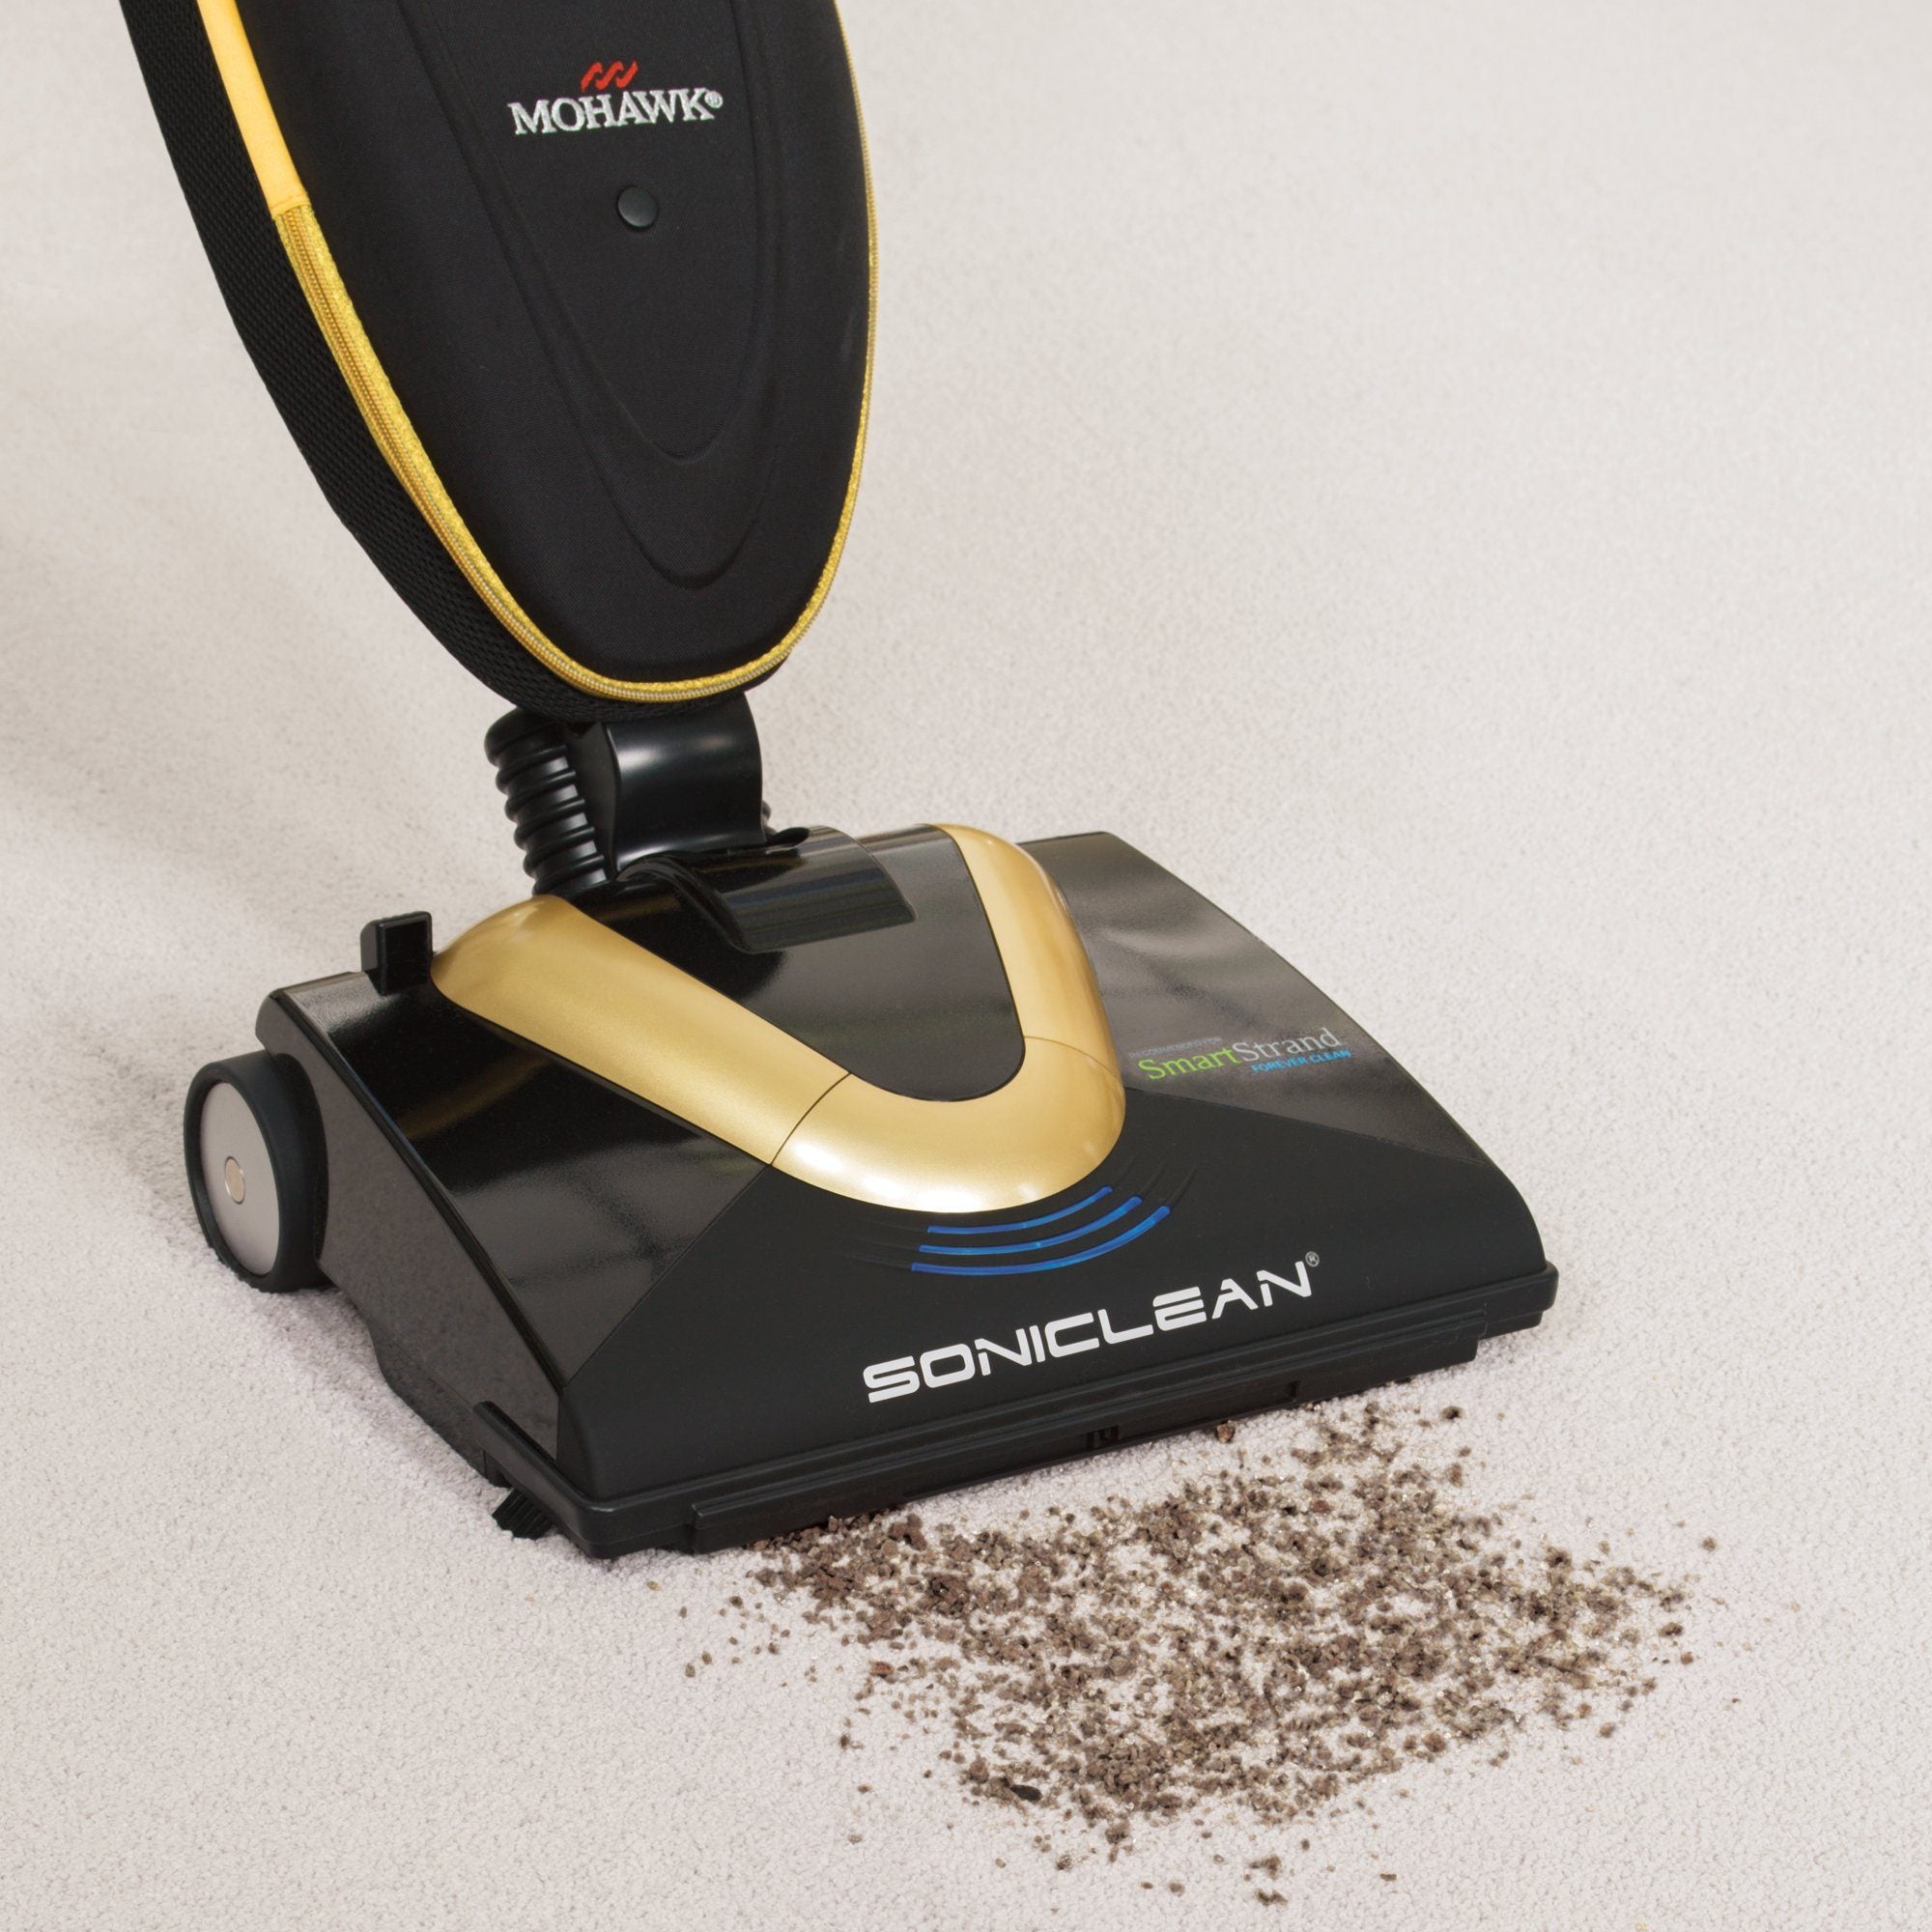 Soniclean Soft Carpet Upright Vacuum/HH-2 Handheld Vacuum COMBO - Soniclean